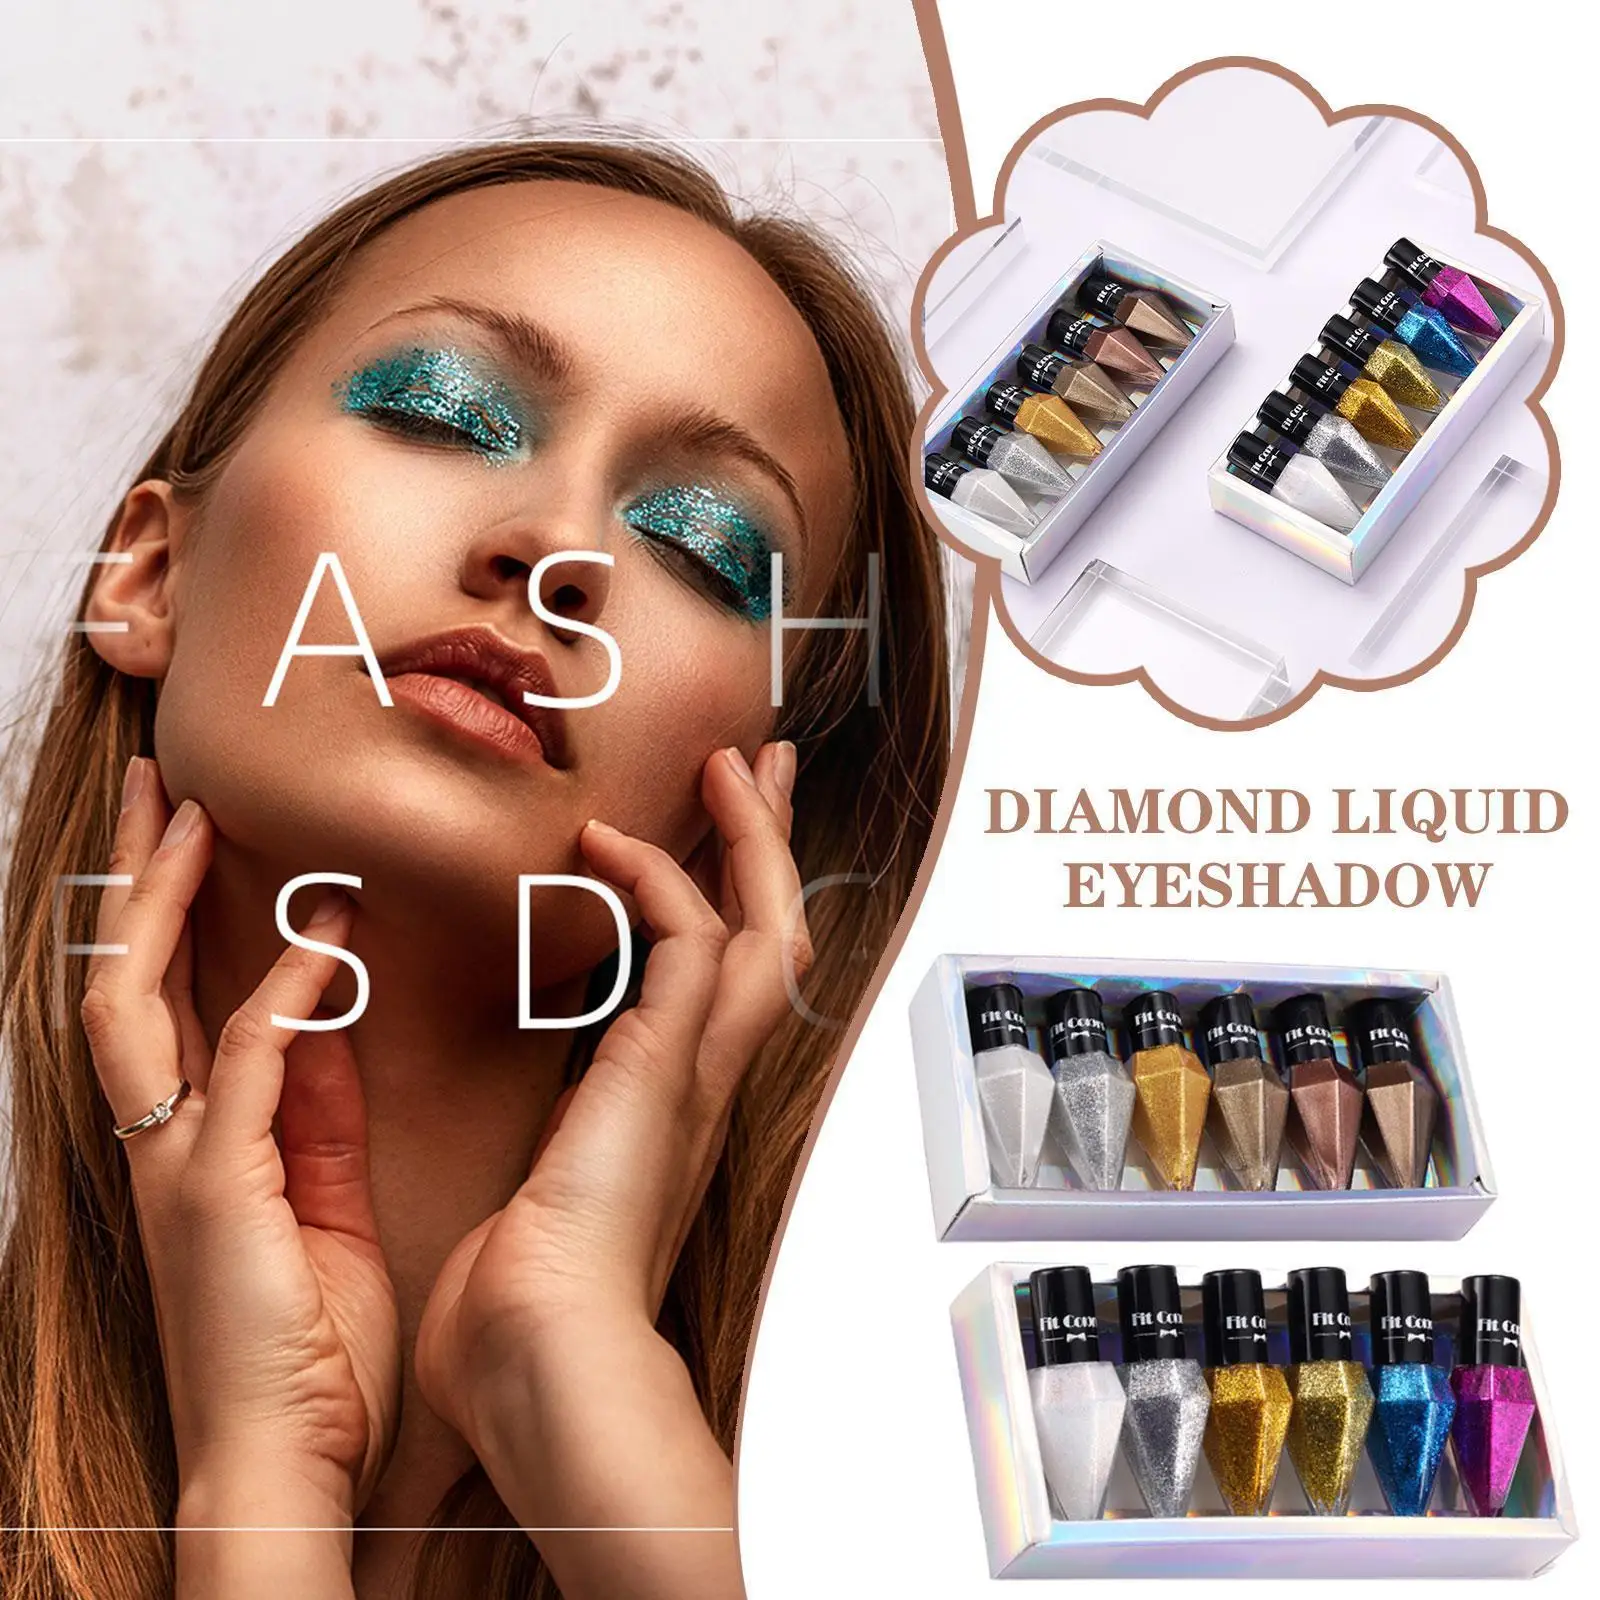 

Fit Colors High Quality Eyeshadow Chameleon Liquid Eye Easy To Makeup Apply Diamond Cosmetic Shiny Gloss Multichrome Shadow J8U6